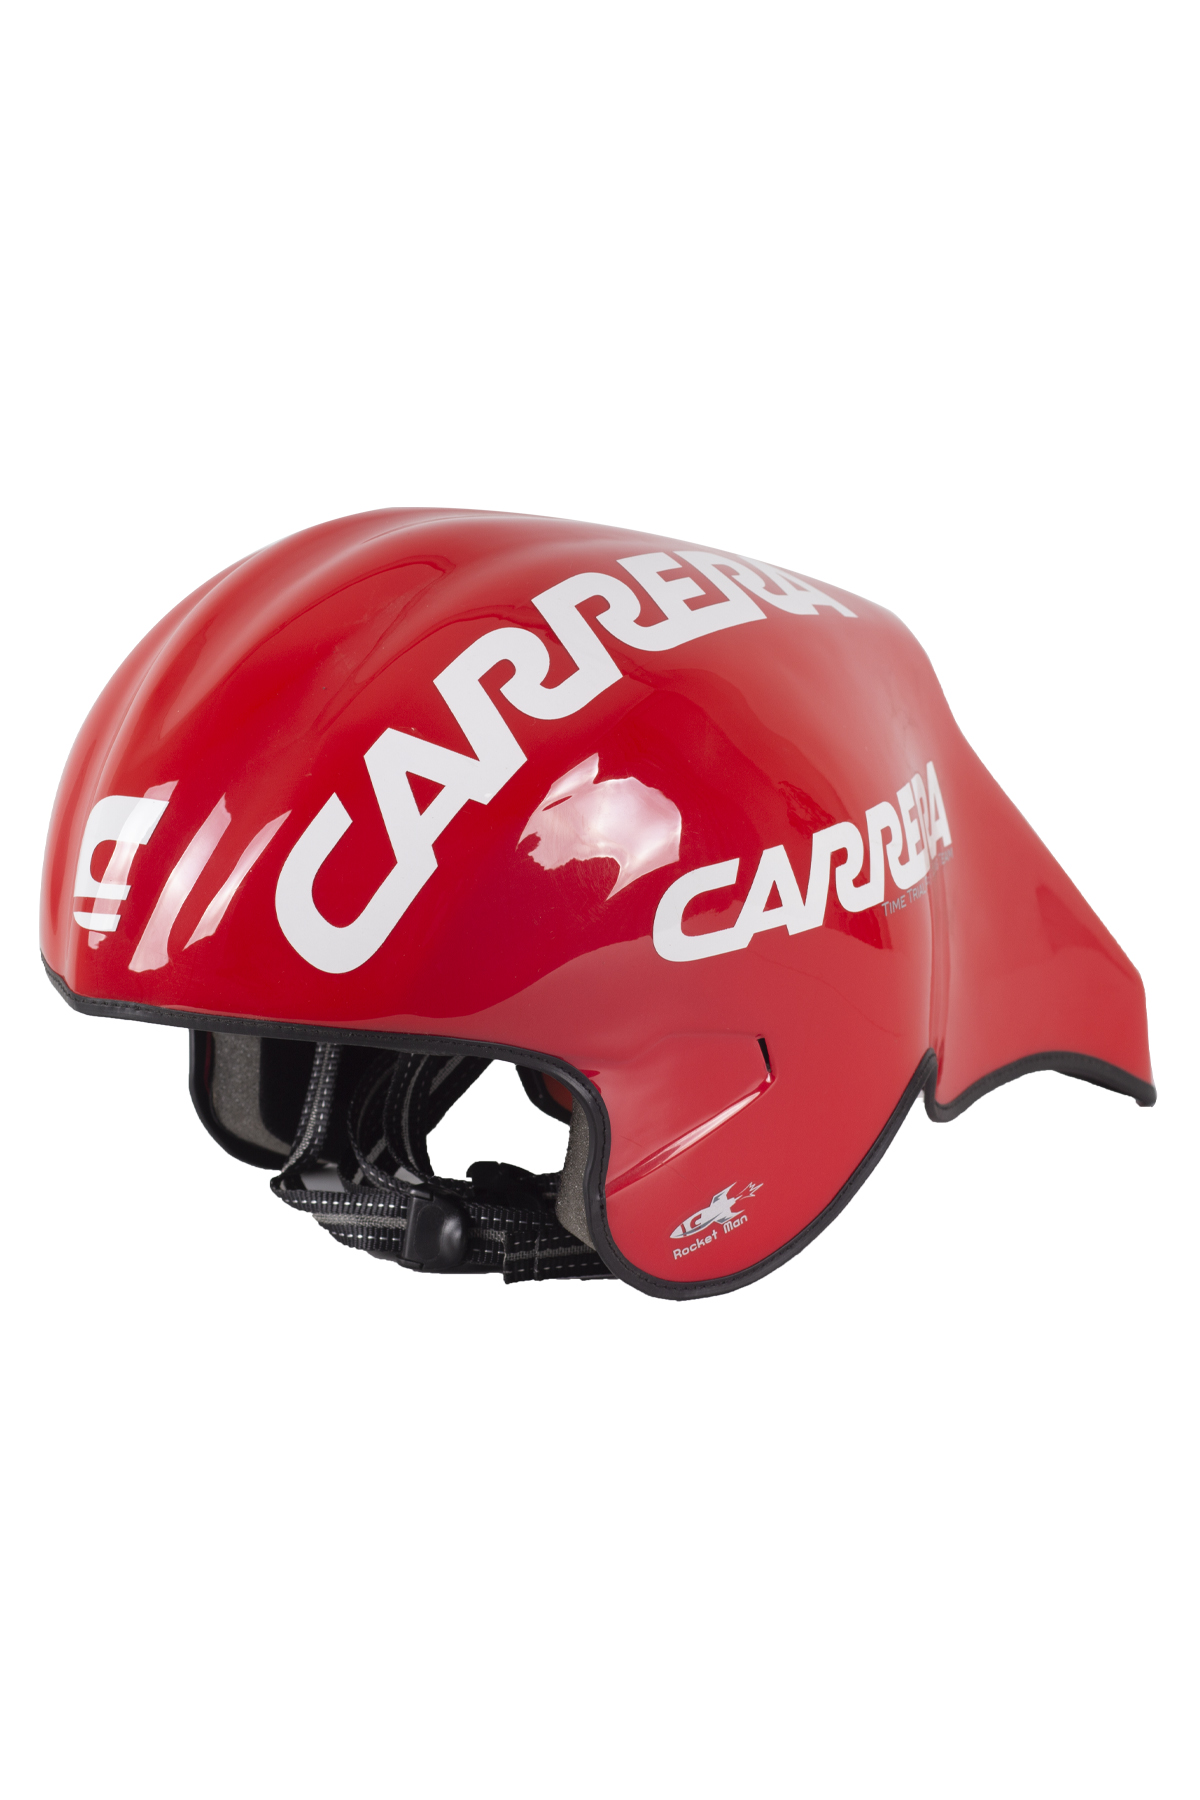 CarreraTT Viper rRed Race Kırmızı  Bisiklet Kaskı